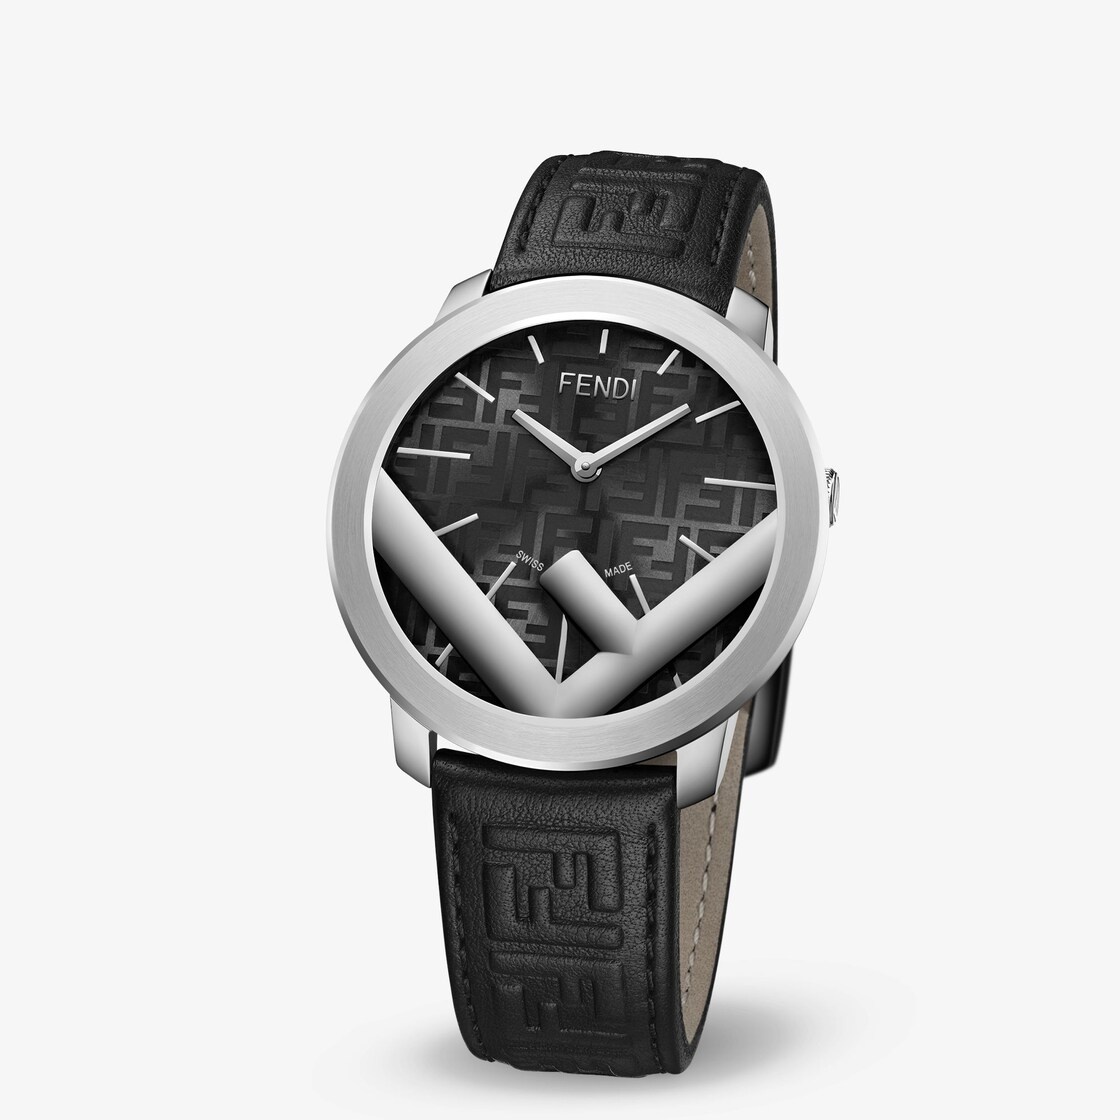 41 MM - Watch with F is Fendi logo - 2